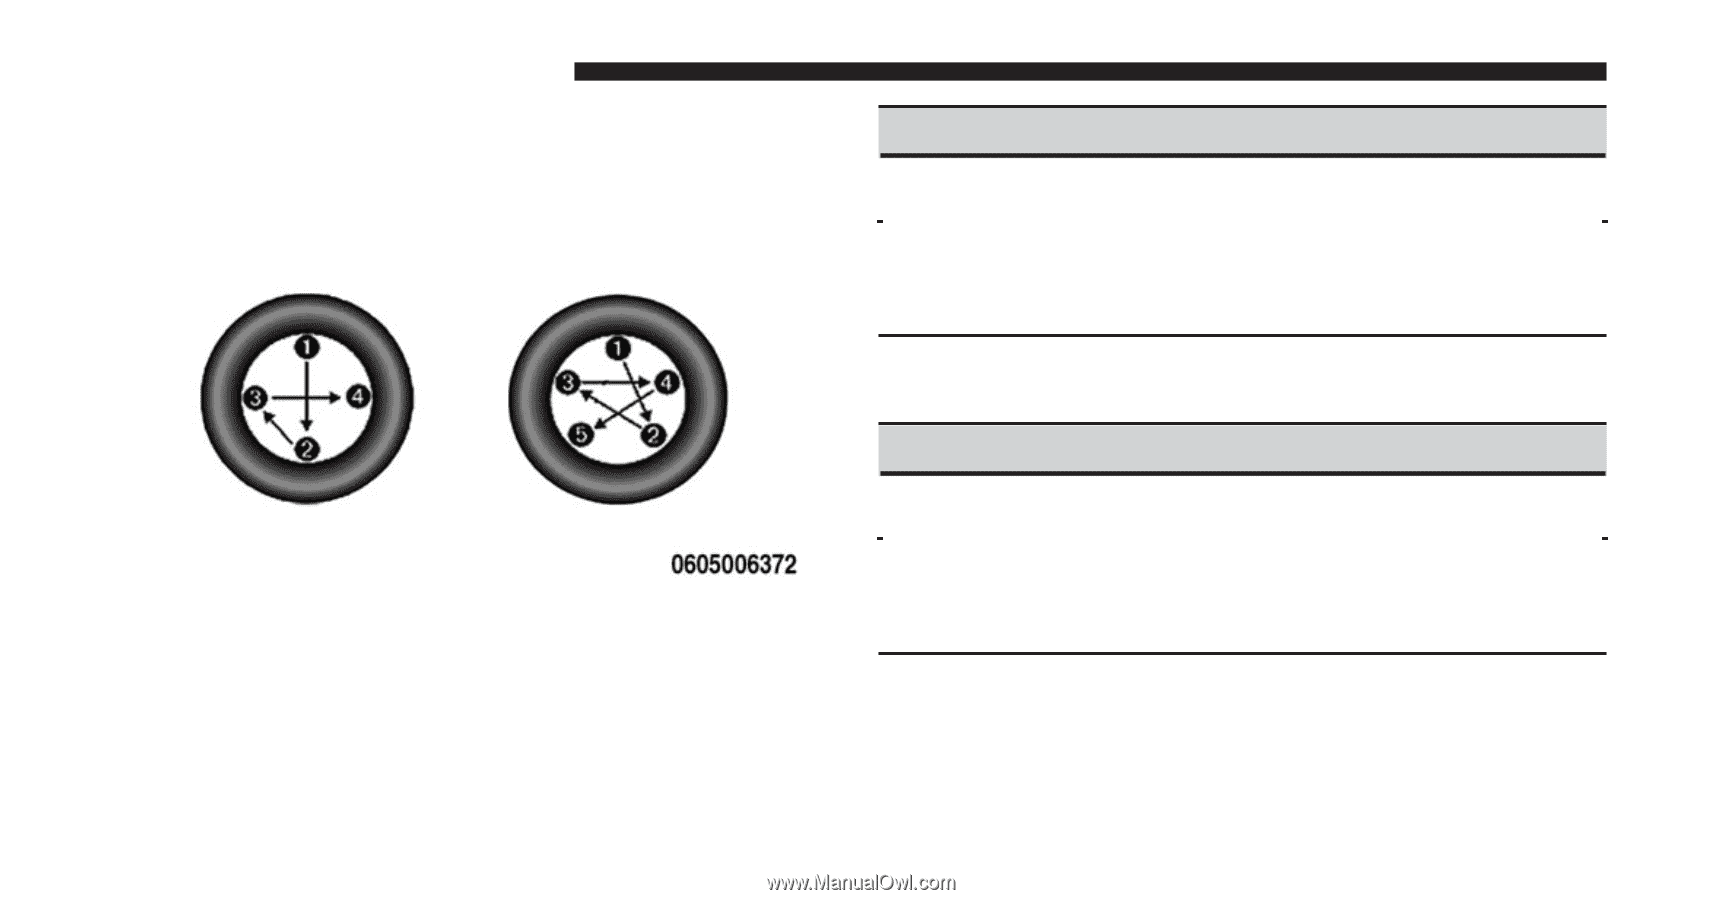 2014 Jeep Compas Wiring Diagram - Wiring Diagram 89